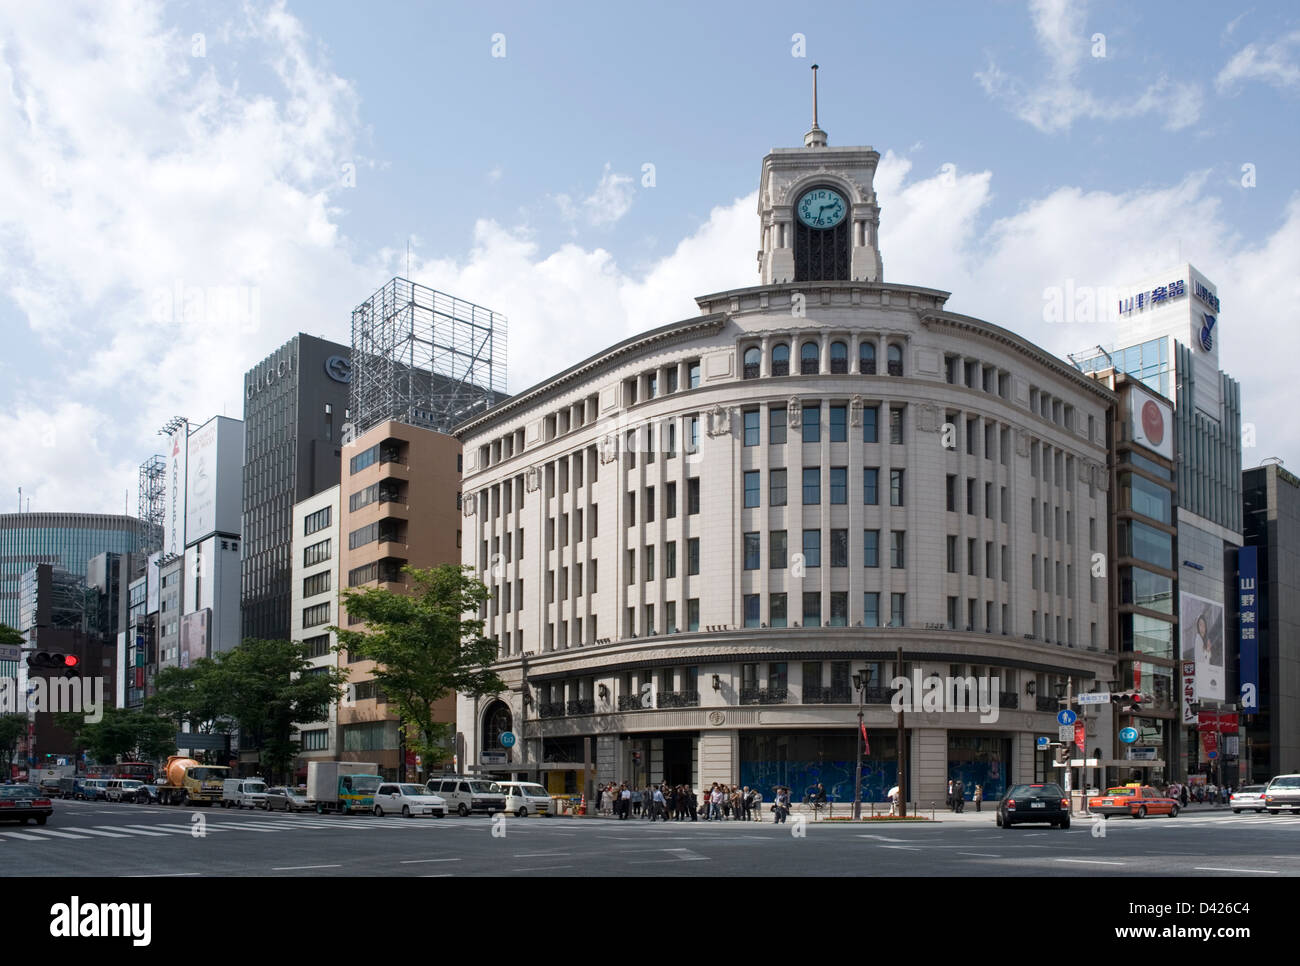 The 1932 Wako Building with landmark clock tower at intersection of Harumi-dori and Chuo-dori Streets in Ginza, Tokyo. Stock Photo